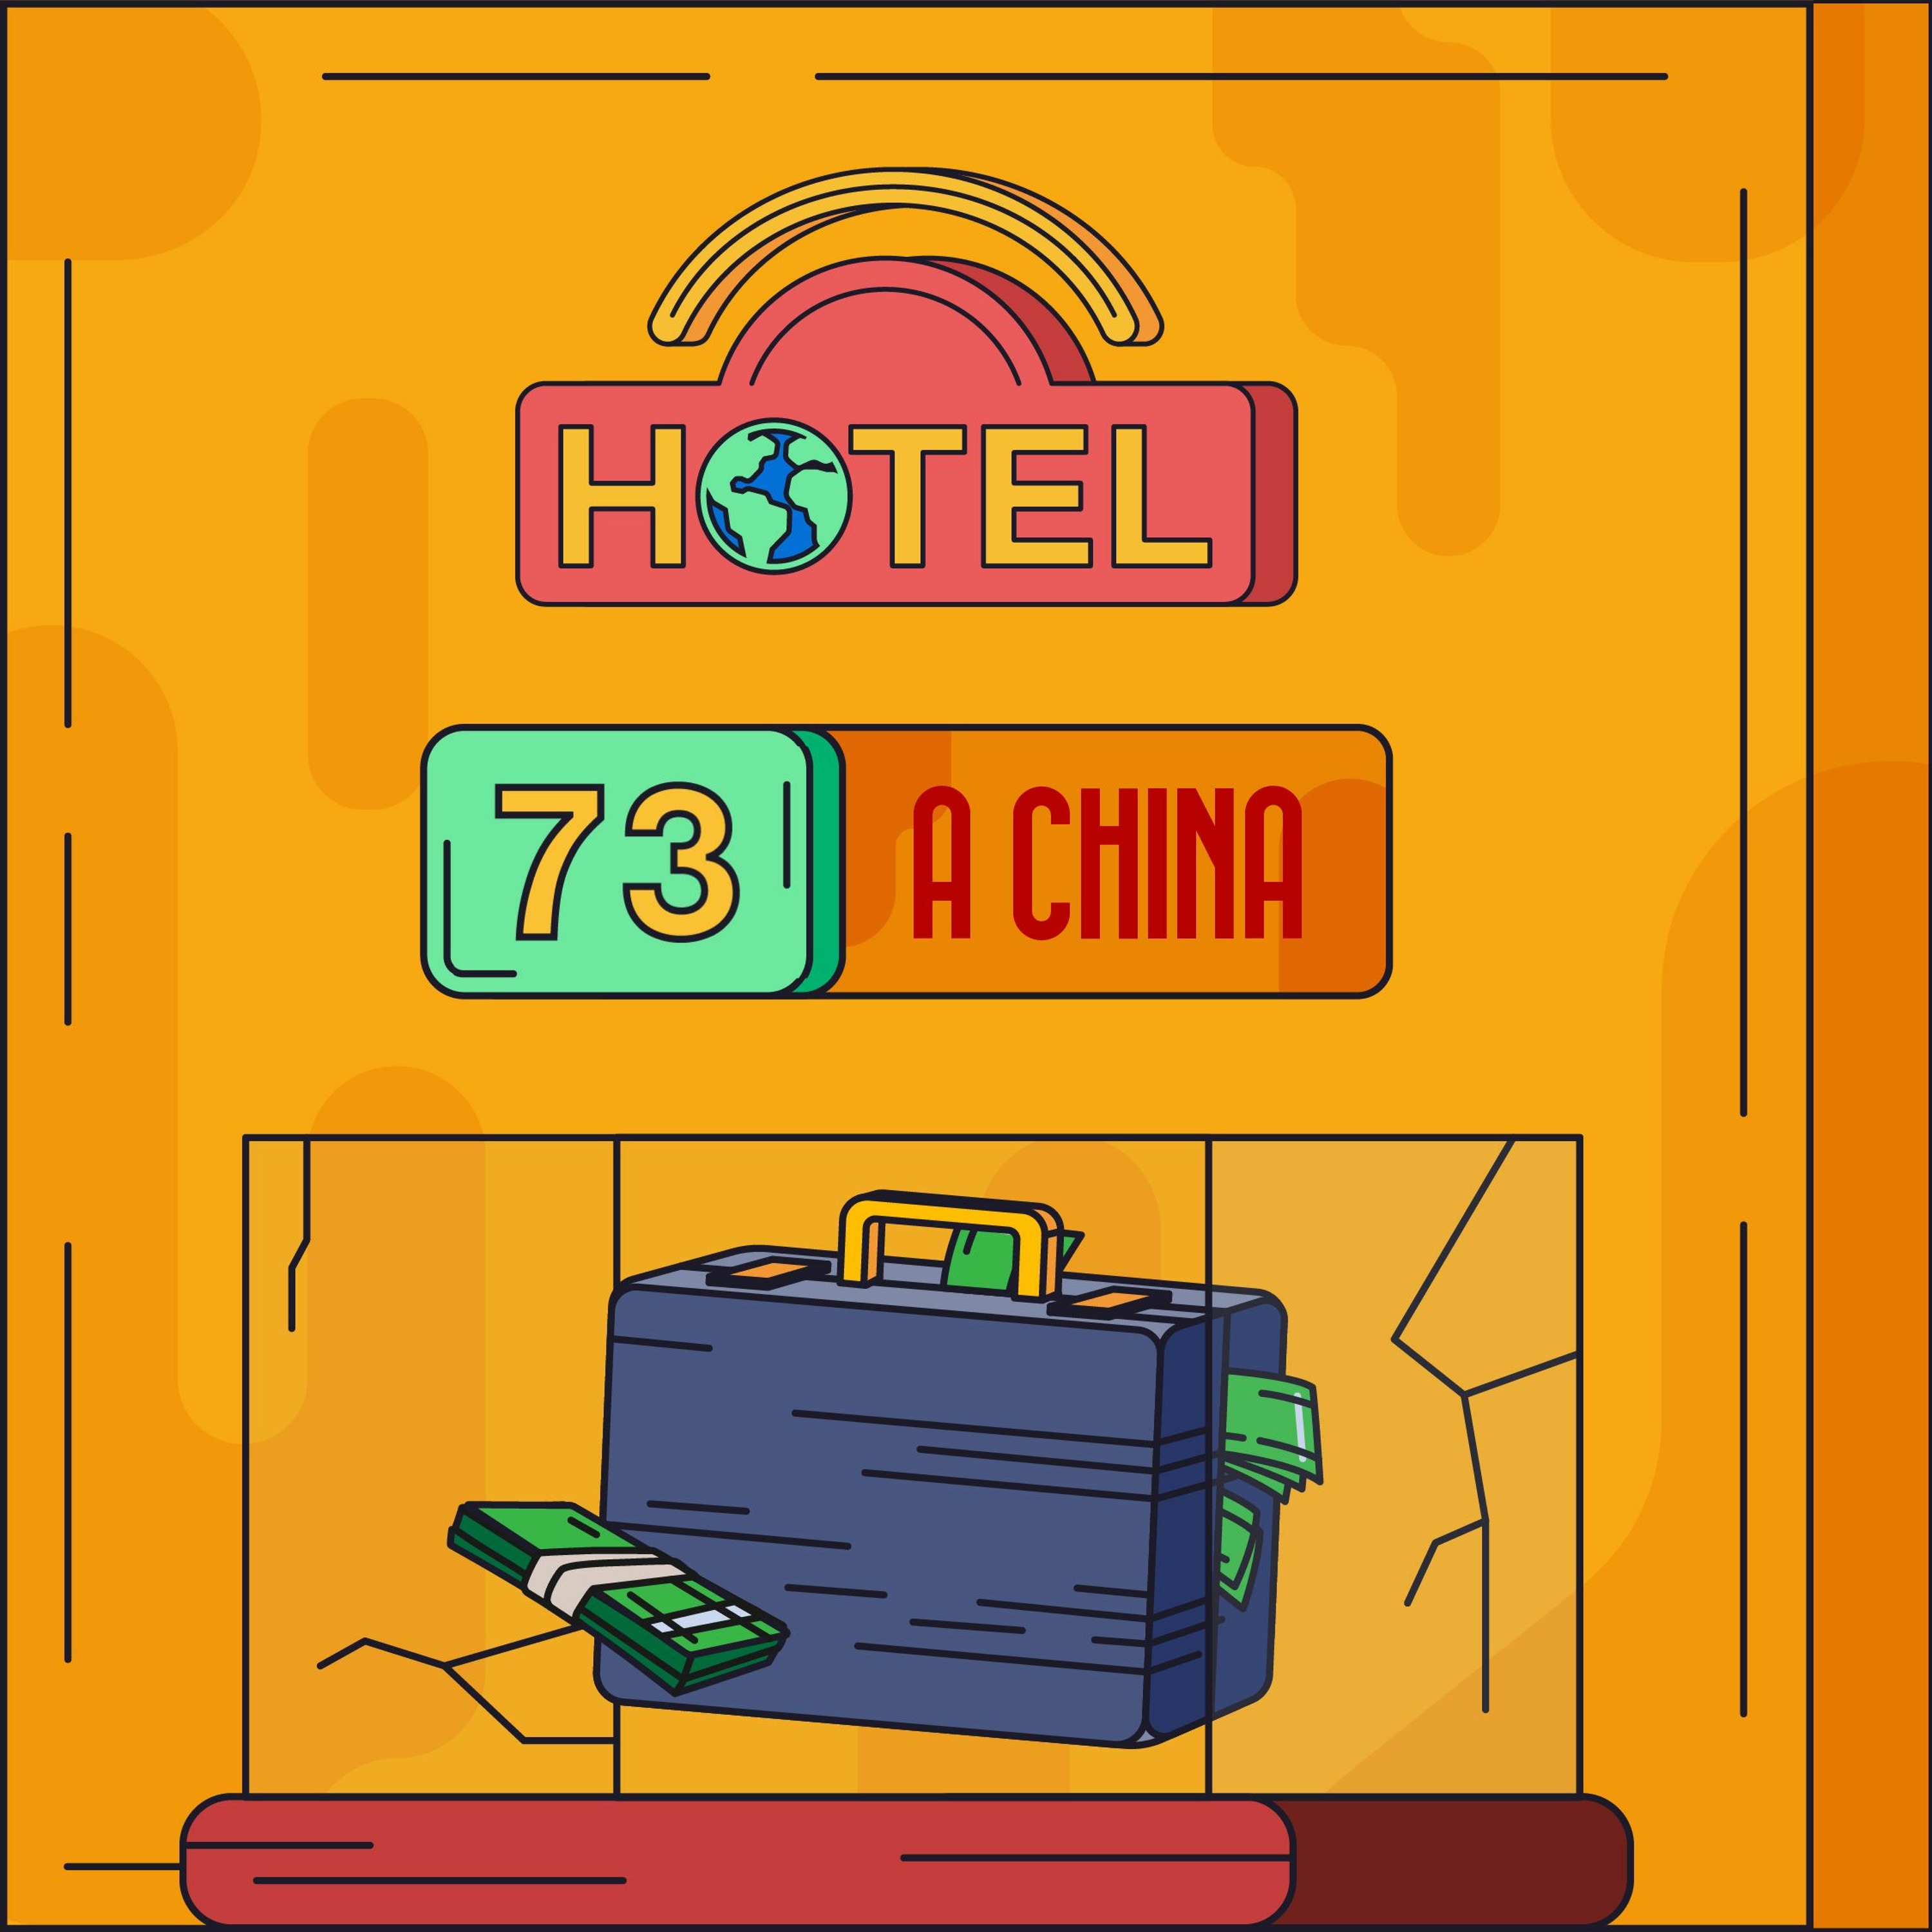 Hotel #73 - A China